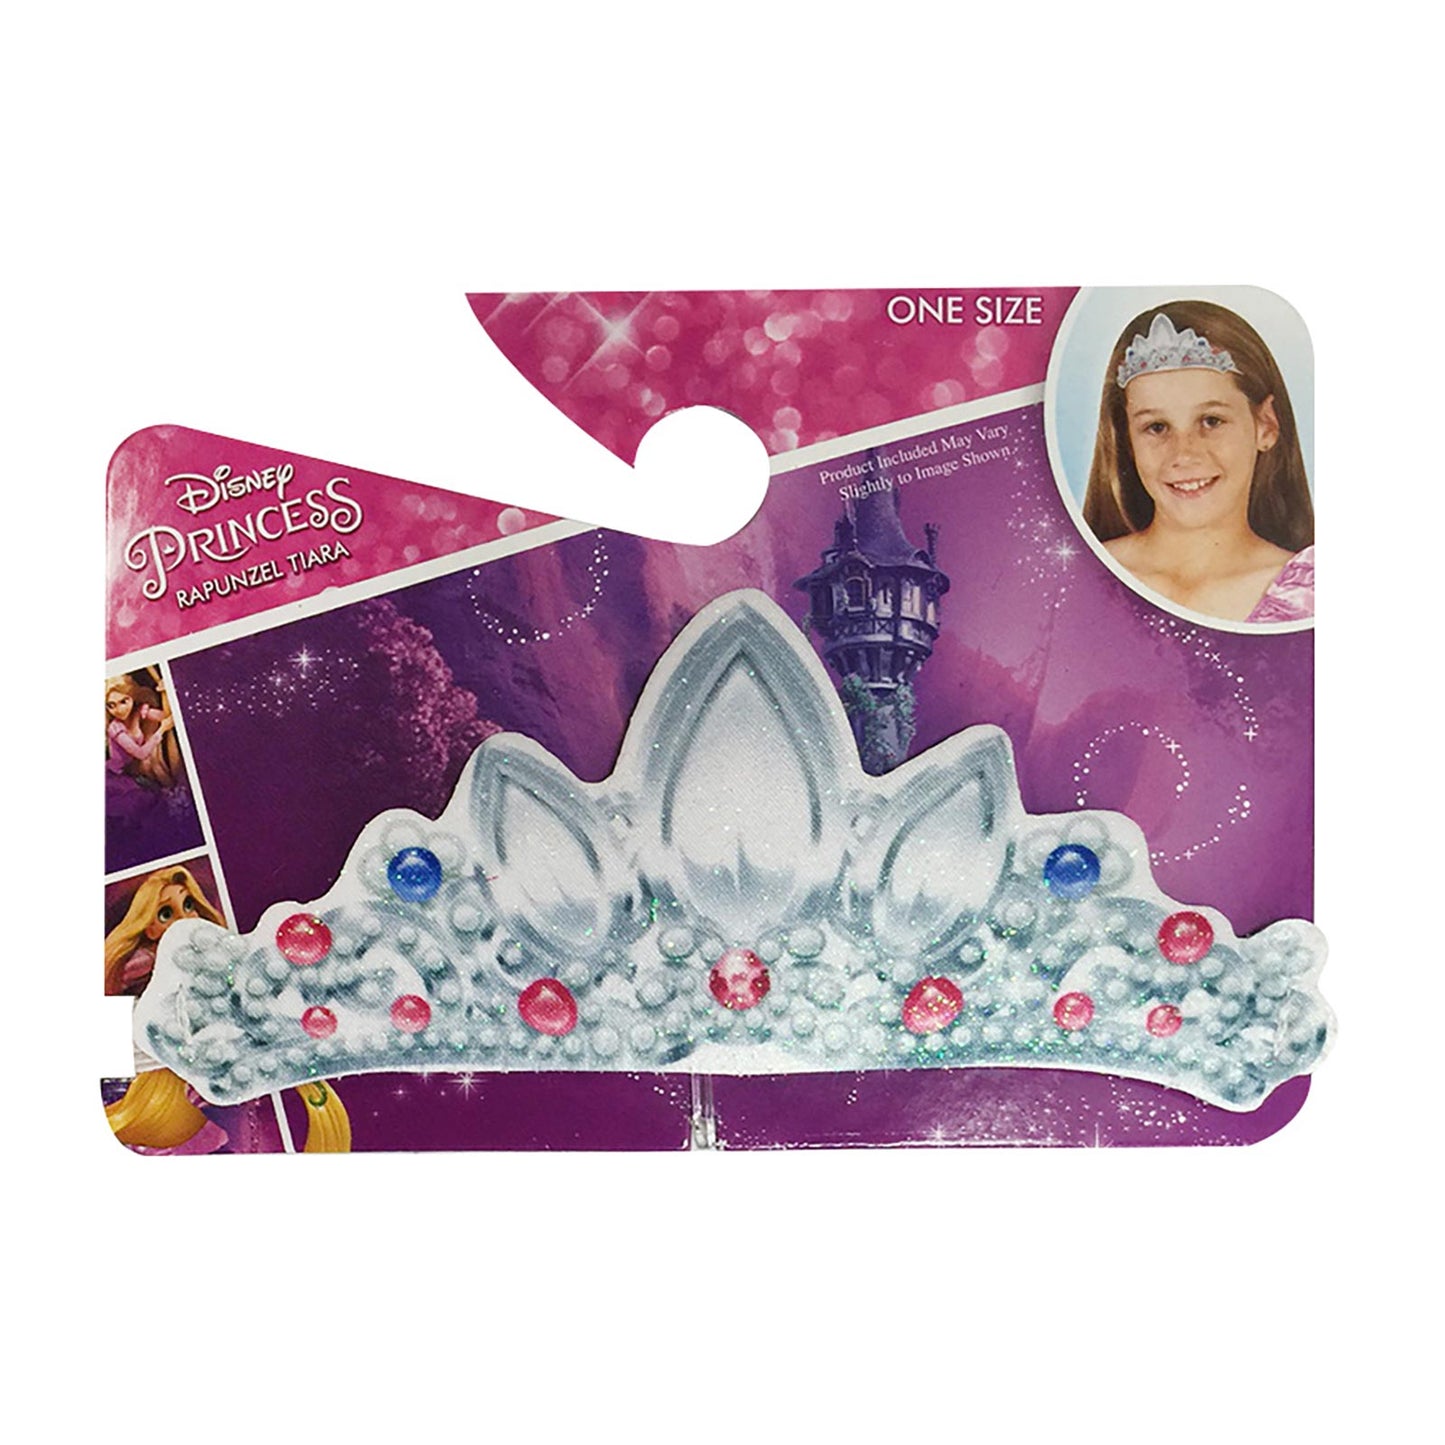 Rapunzel Fabric Tiara Crown Child Girls costume accessory